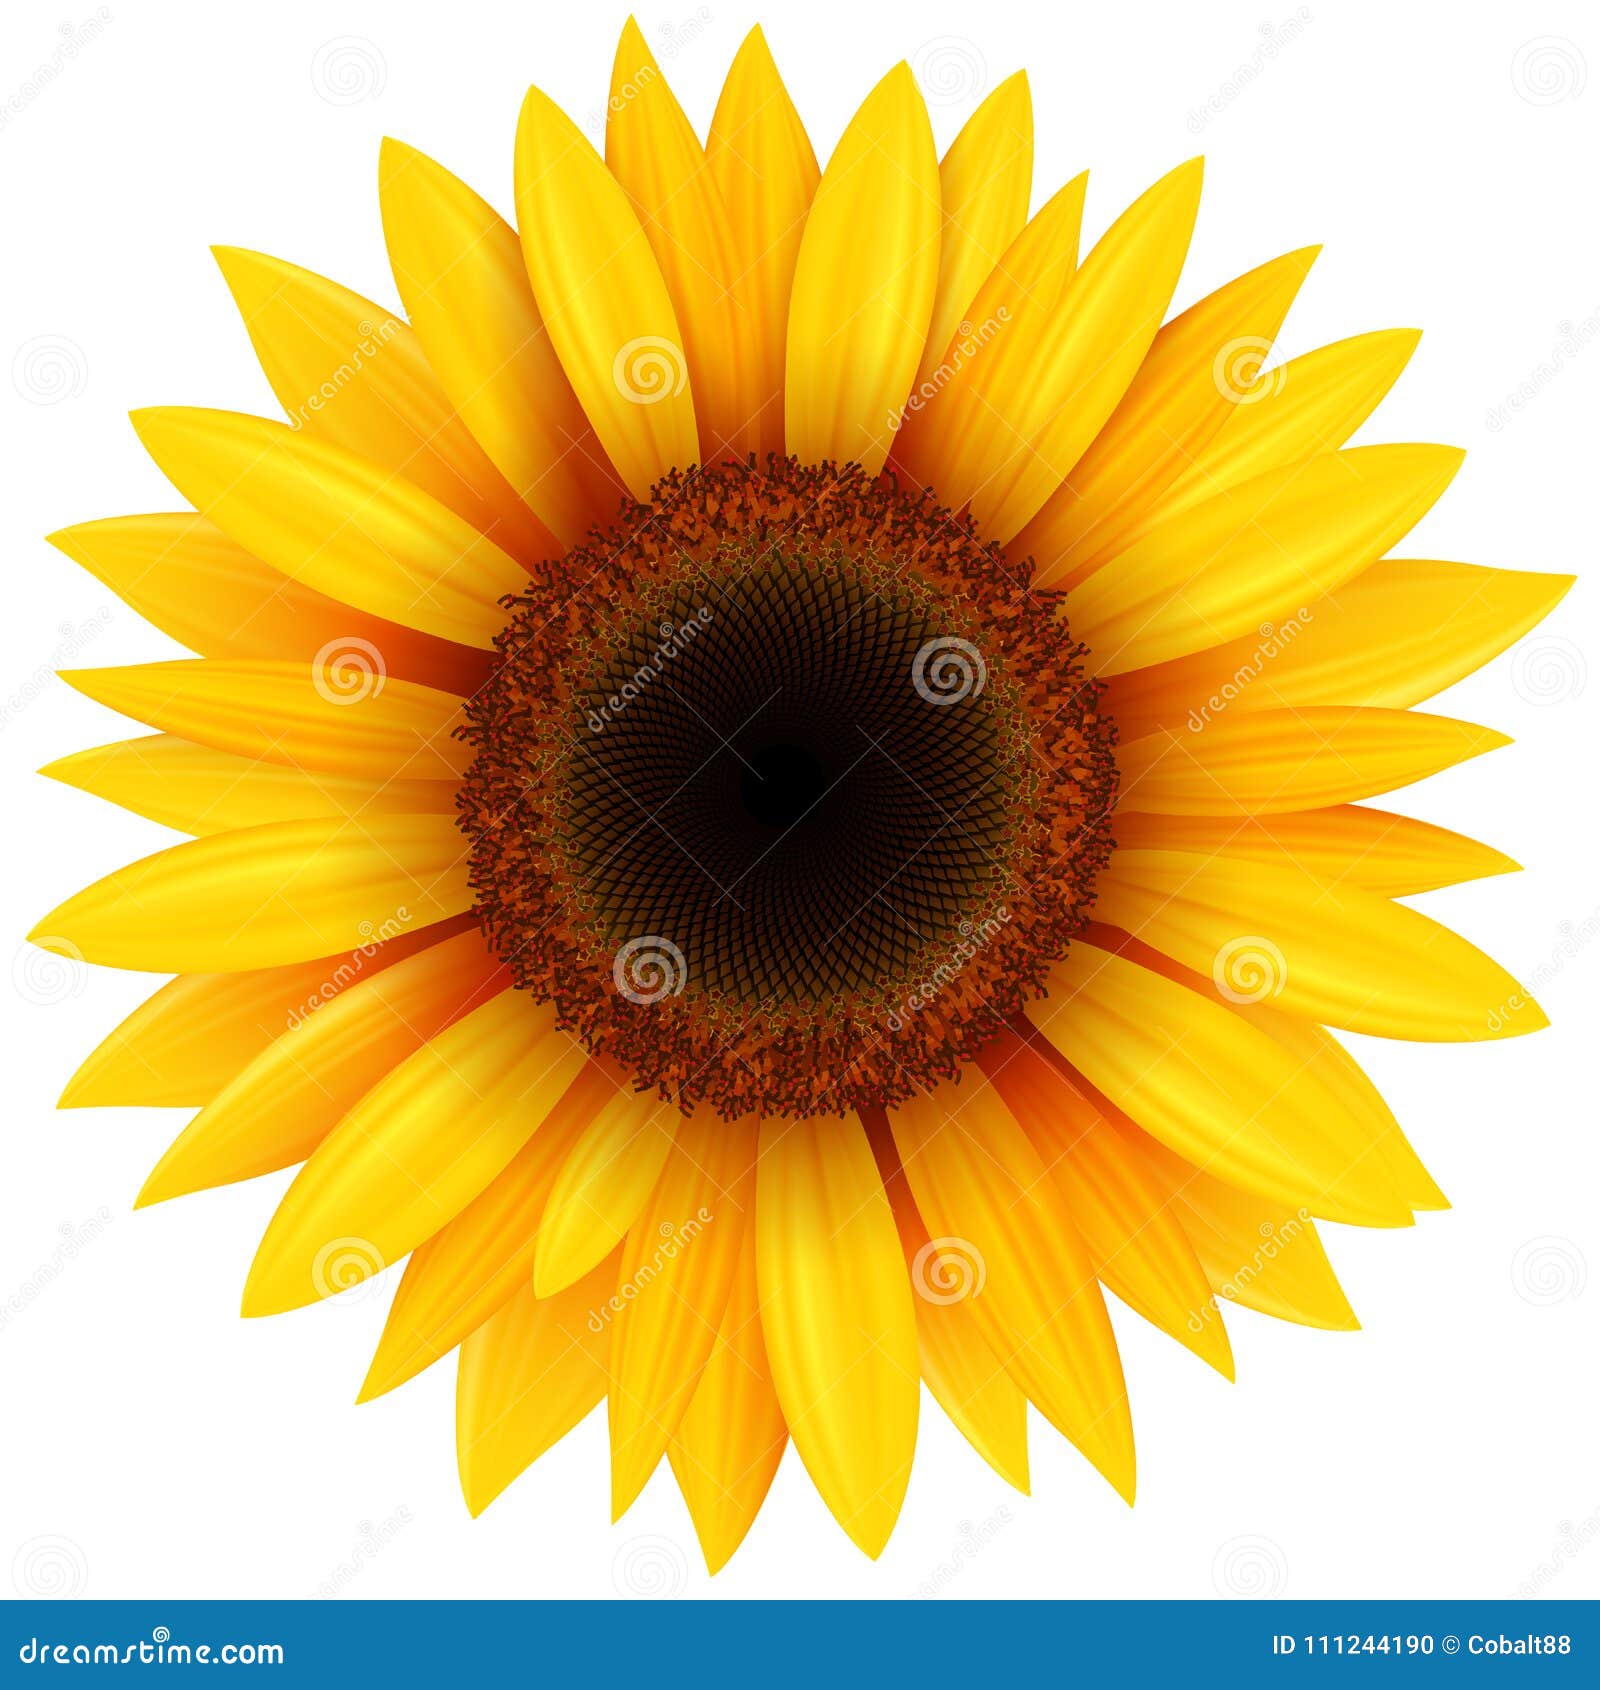 sunflower flower 